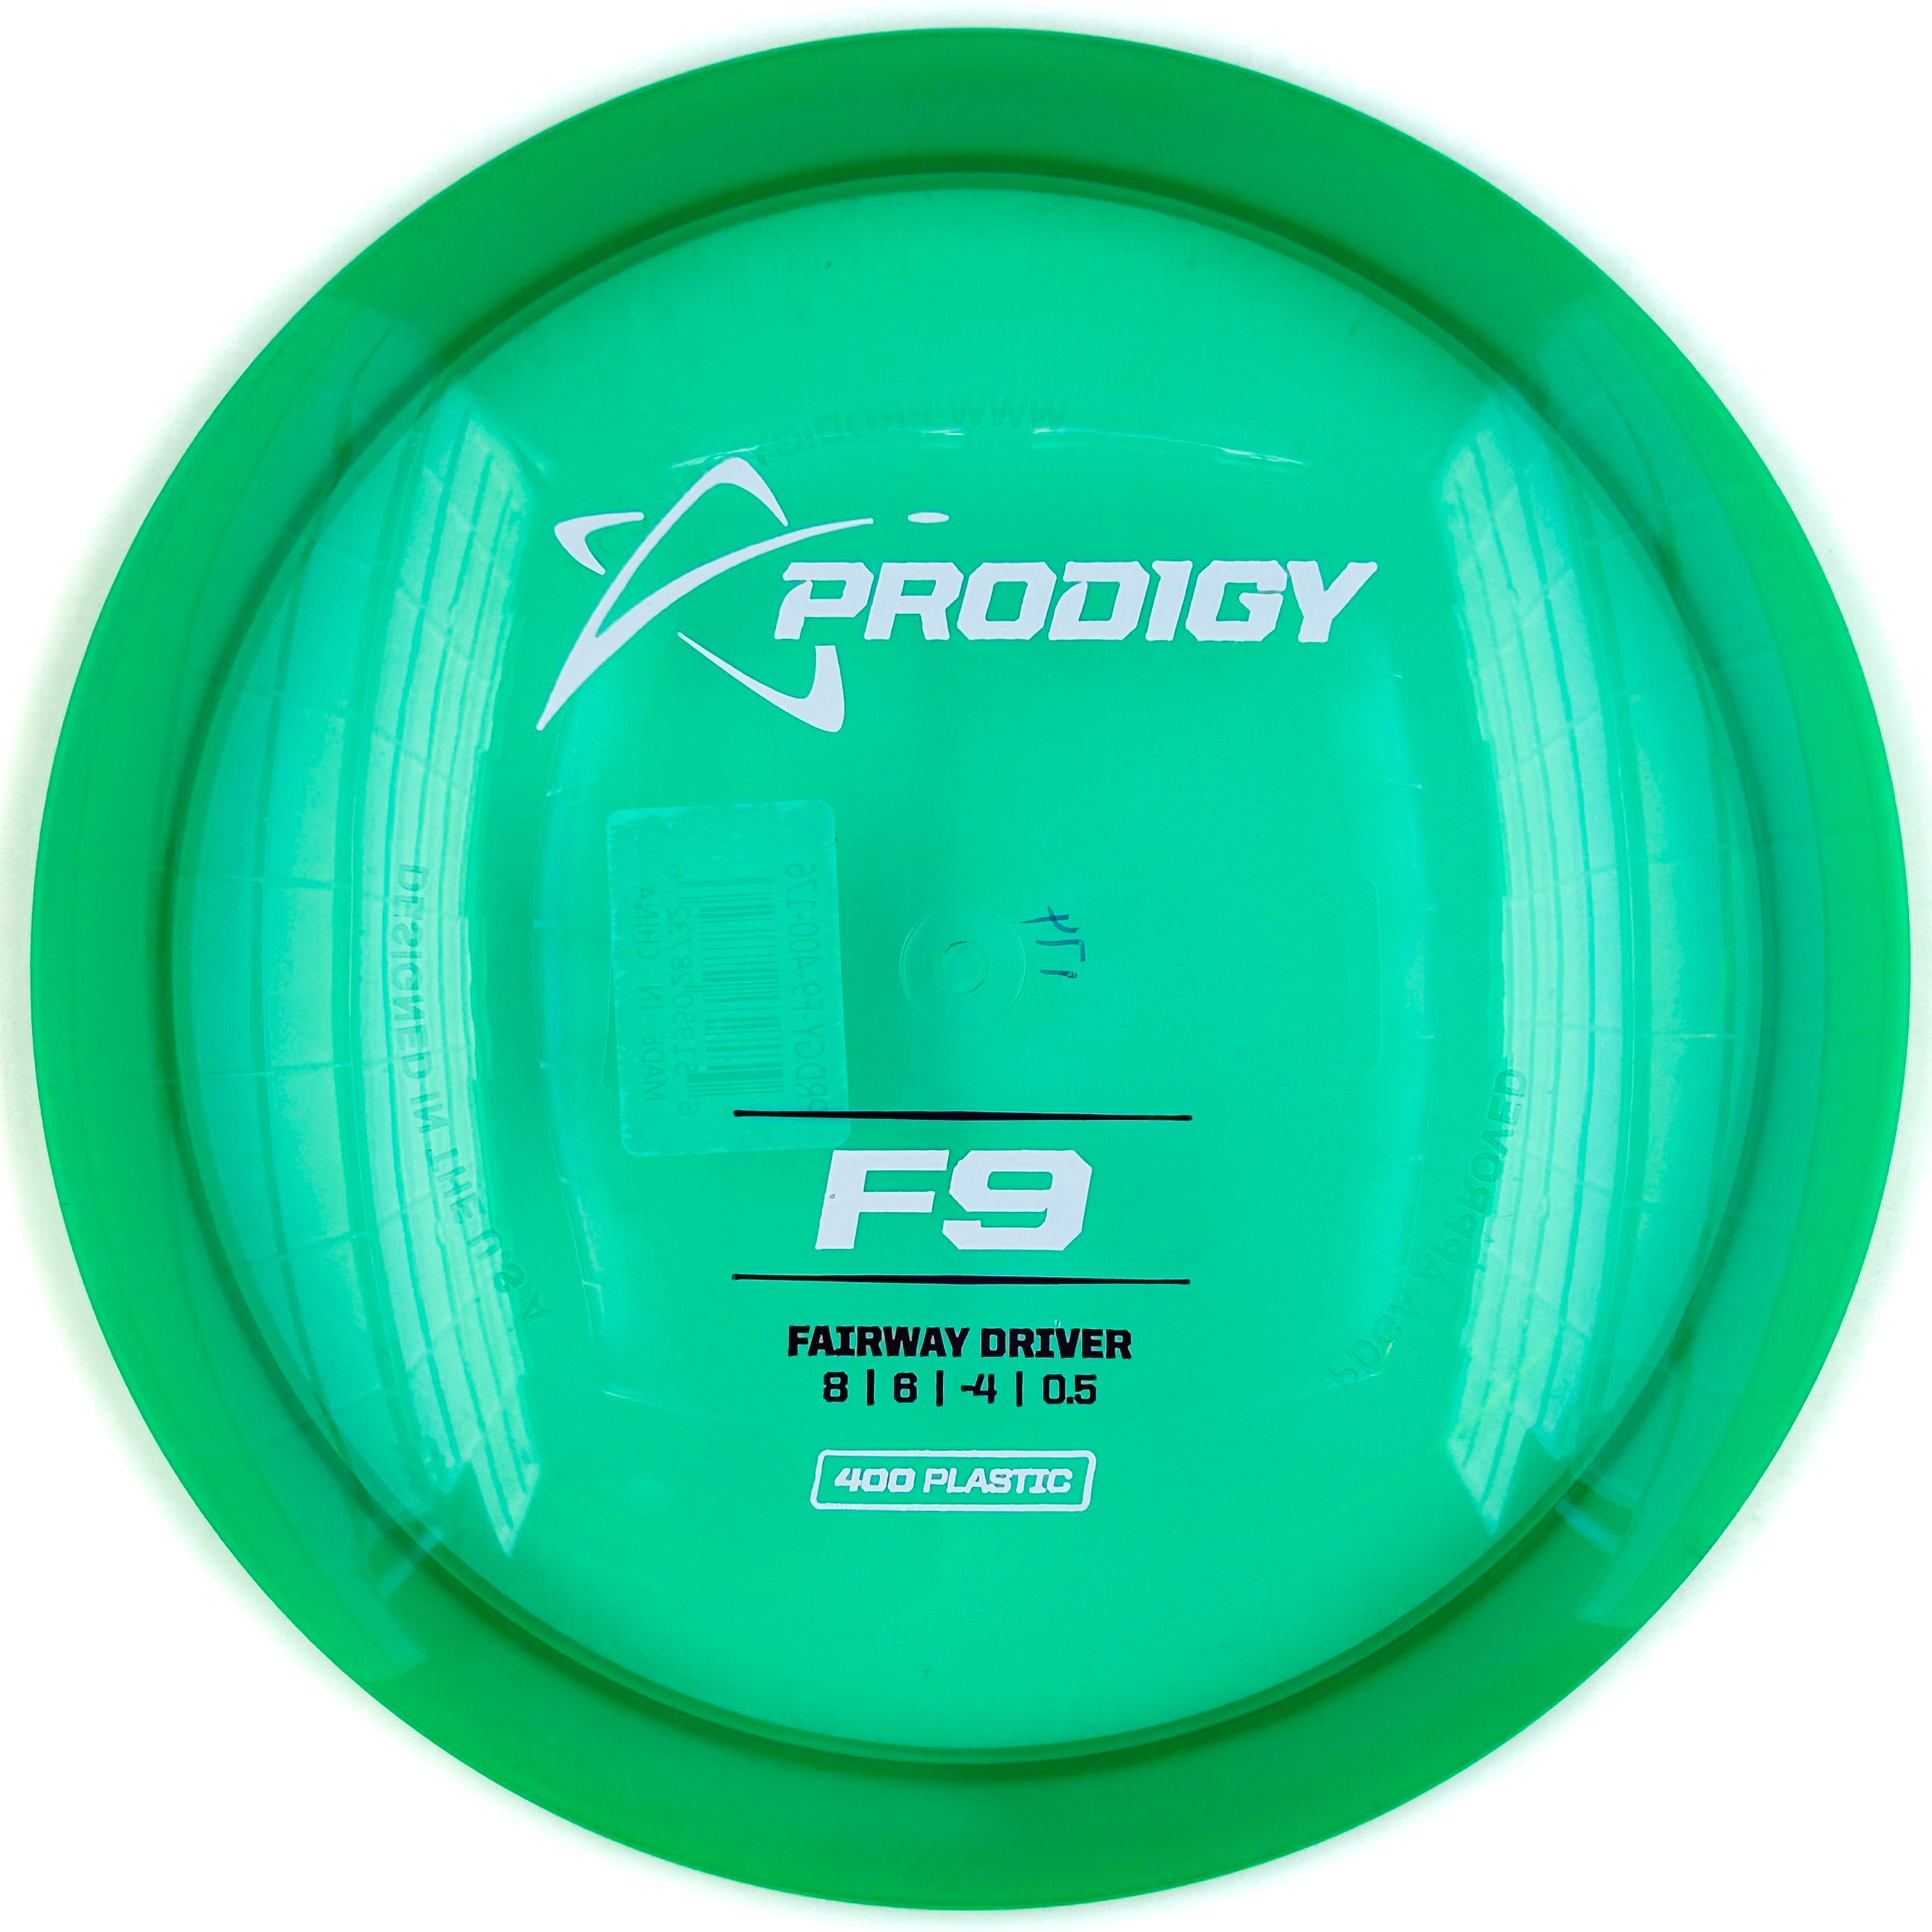 Prodigy F9 400 (Fairway Driver)